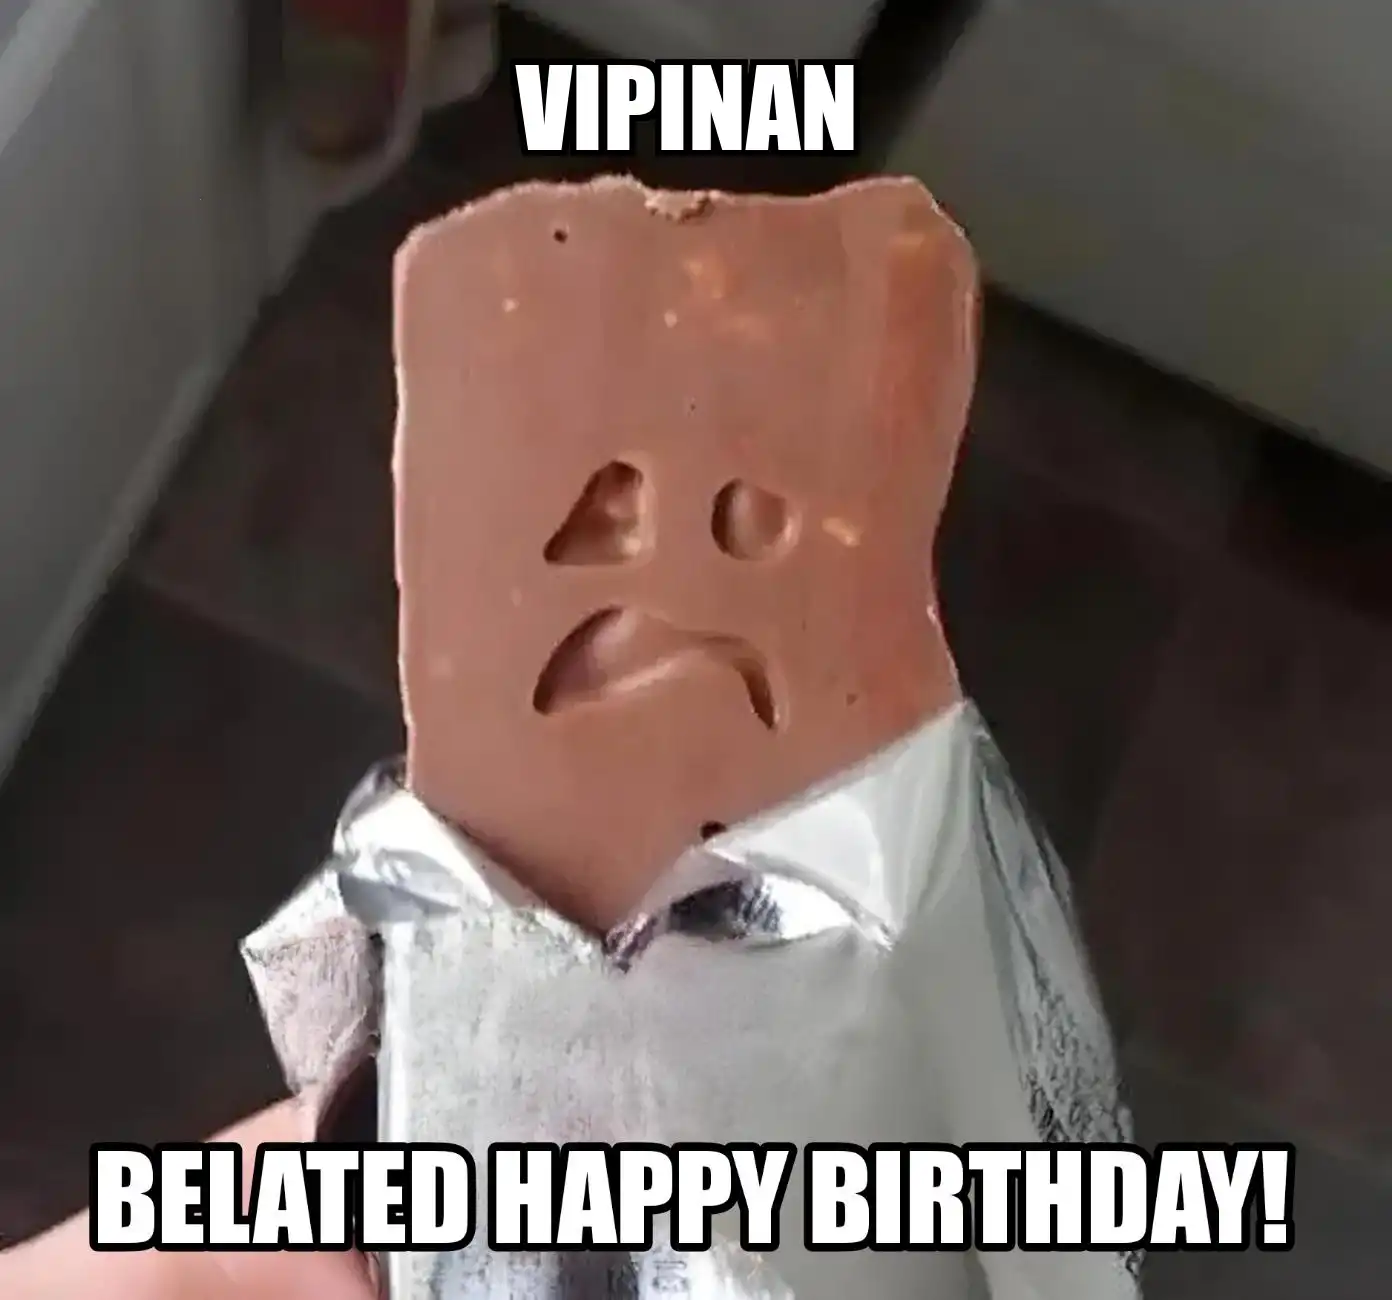 Happy Birthday Vipinan Belated Happy Birthday Meme